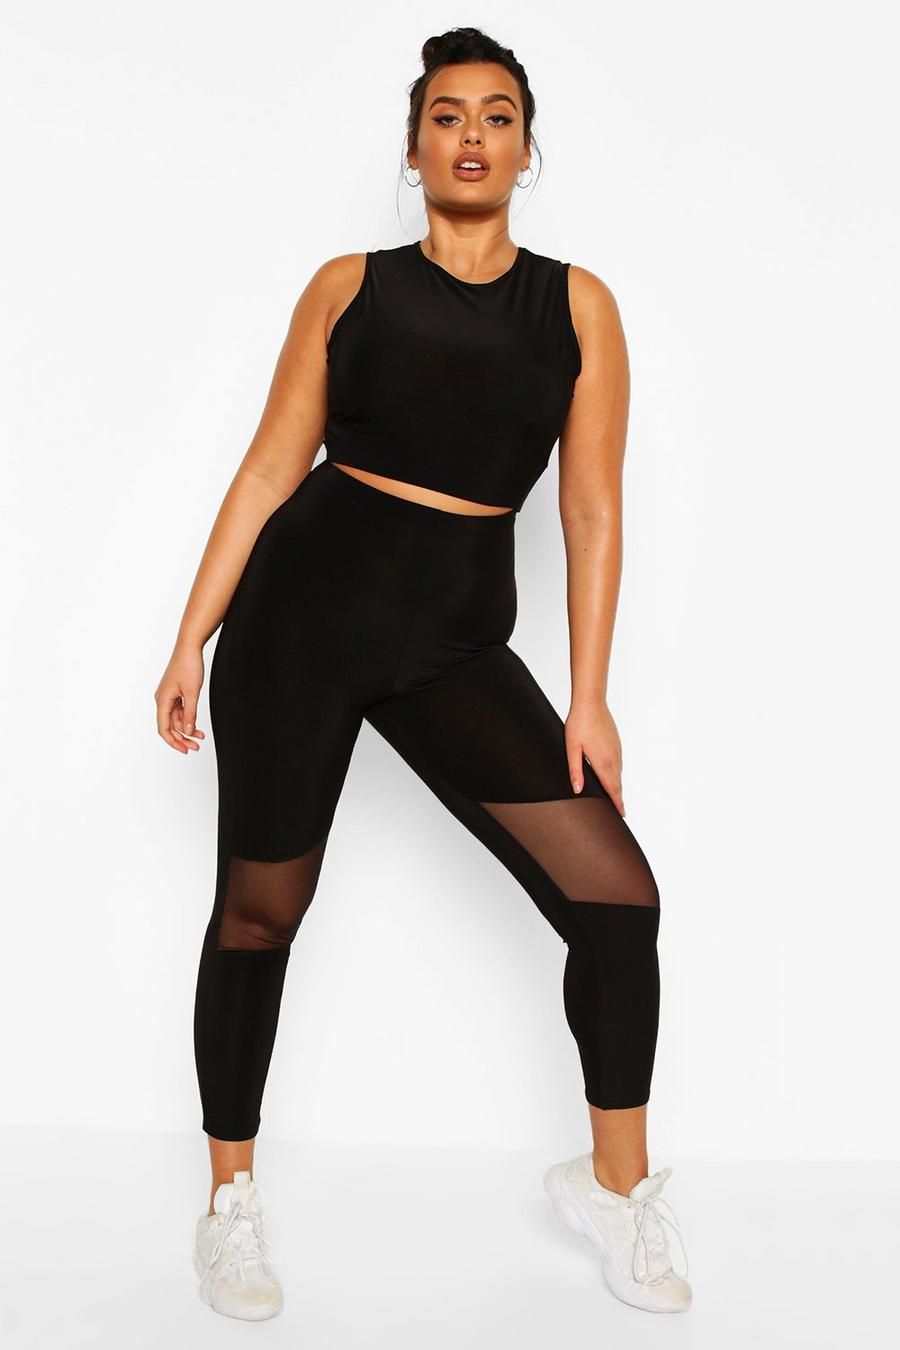 https://media.boohoo.com/i/boohoo/pzz66836_black_xl/female-black-plus-activewear-mesh-cut-out-gym-leggings/?w=900&qlt=default&fmt.jp2.qlt=70&fmt=auto&sm=fit